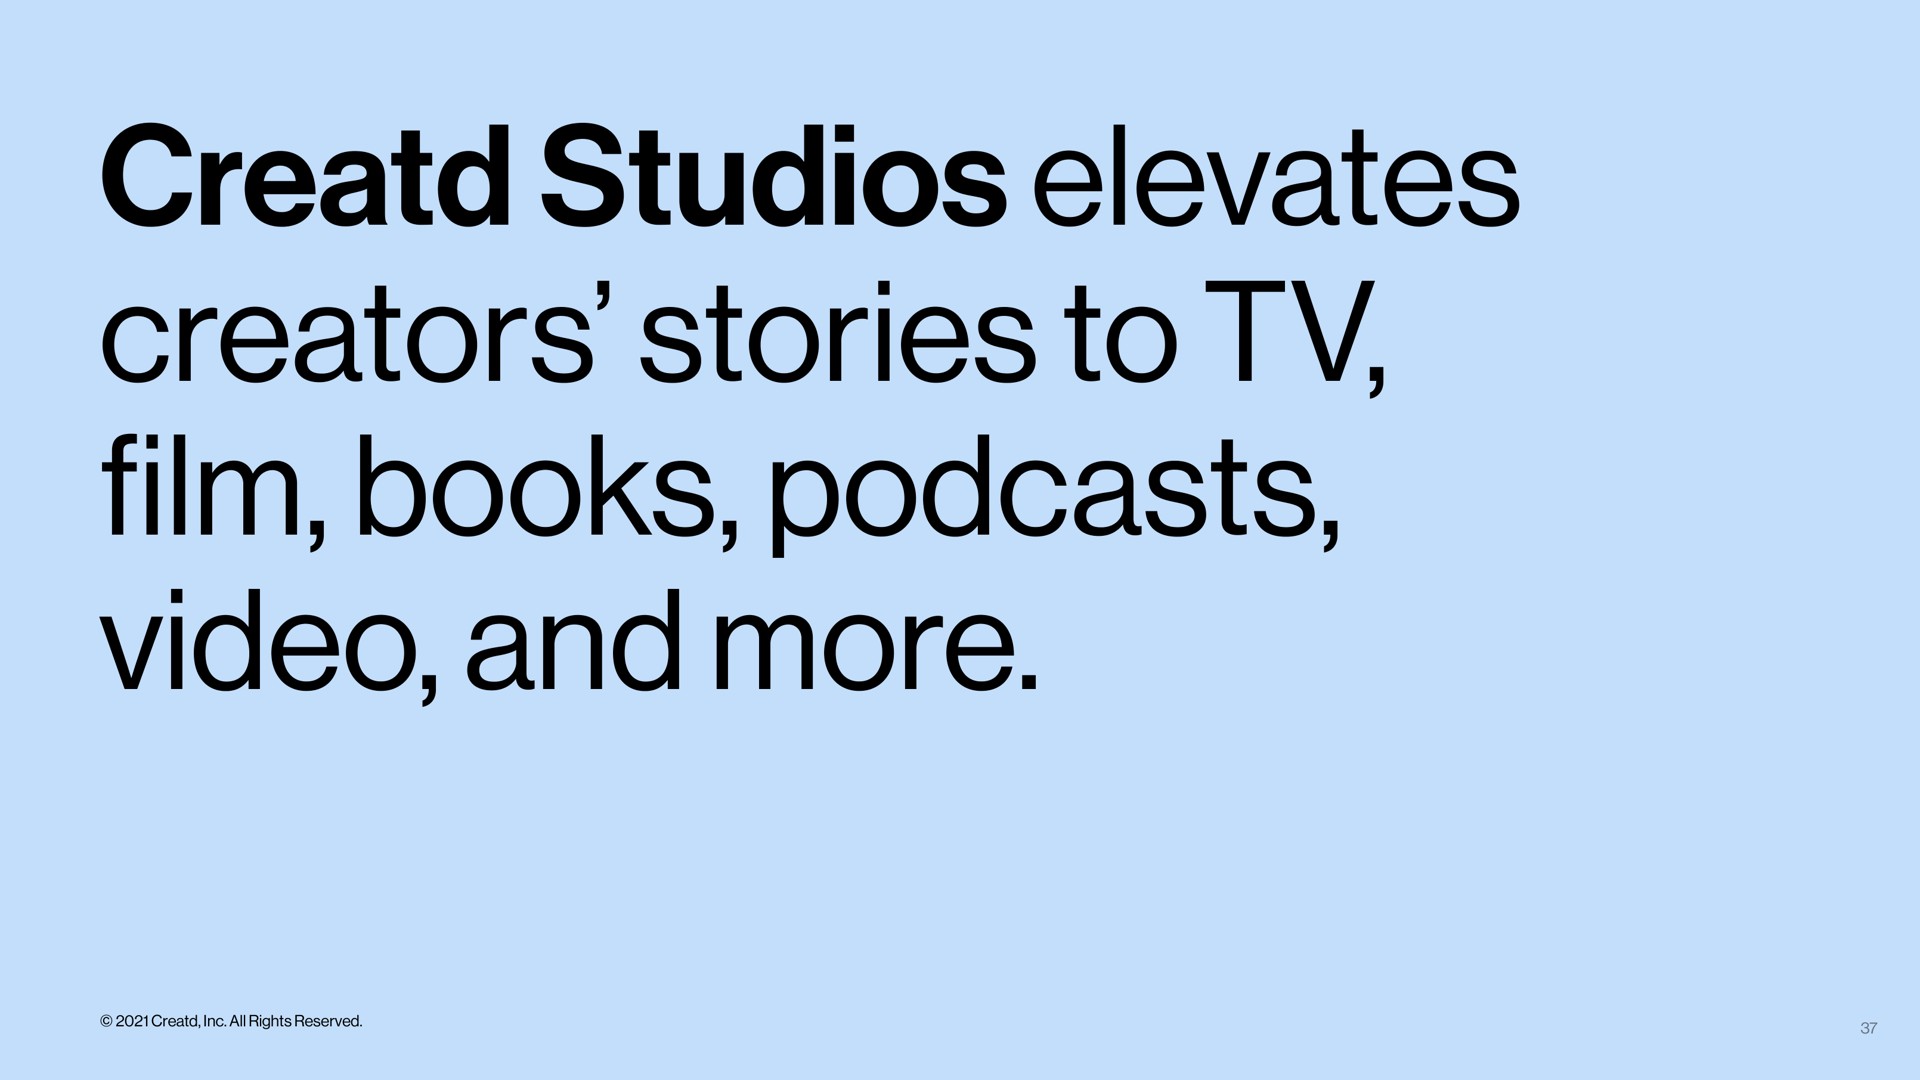 studios elevates creators stories to books video and more film | Creatd